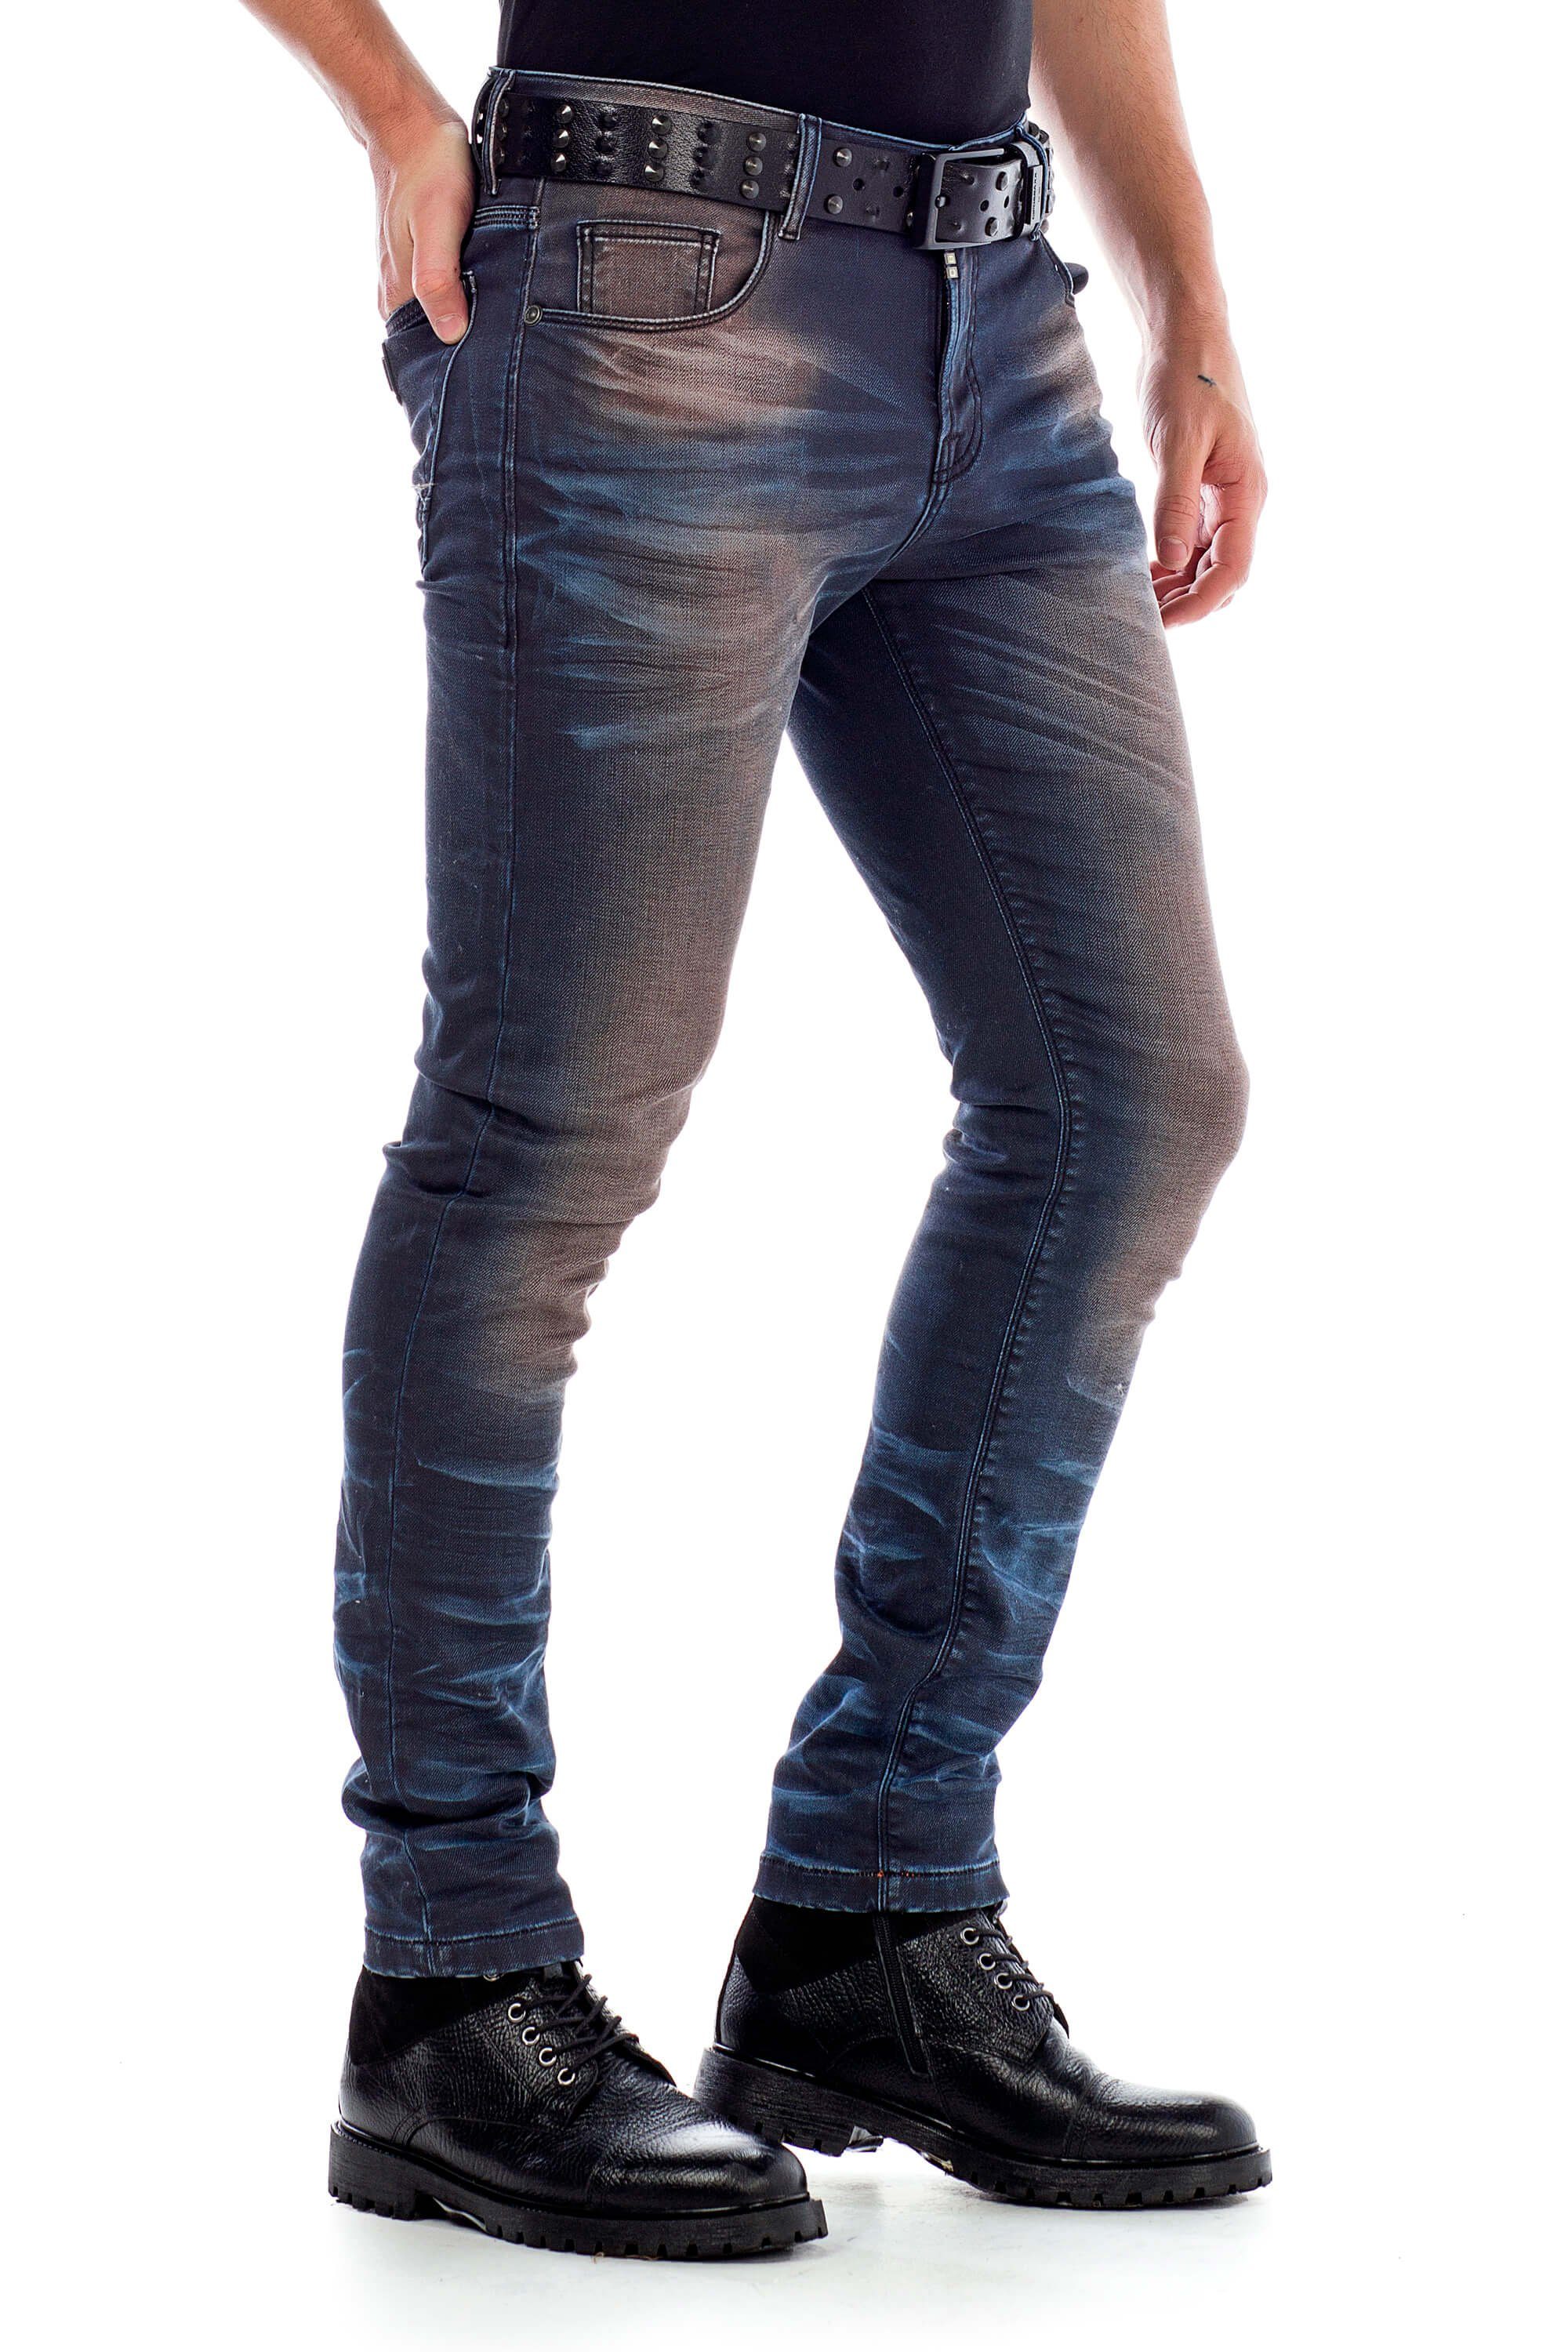 Cipo & Baxx Slim-fit-Jeans im 5-Pocket braun in Fit Style Straight